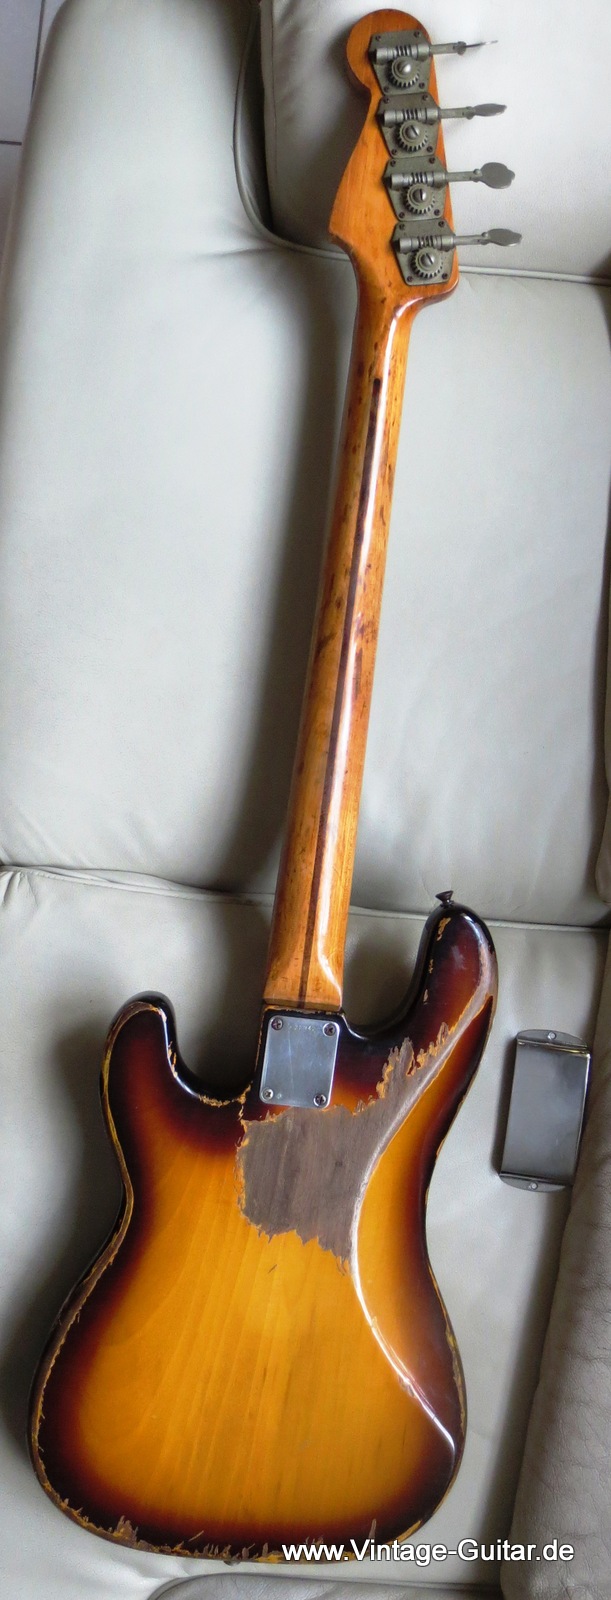 Fender_Precision_Bass_1958-anodized-pickguard-006.JPG